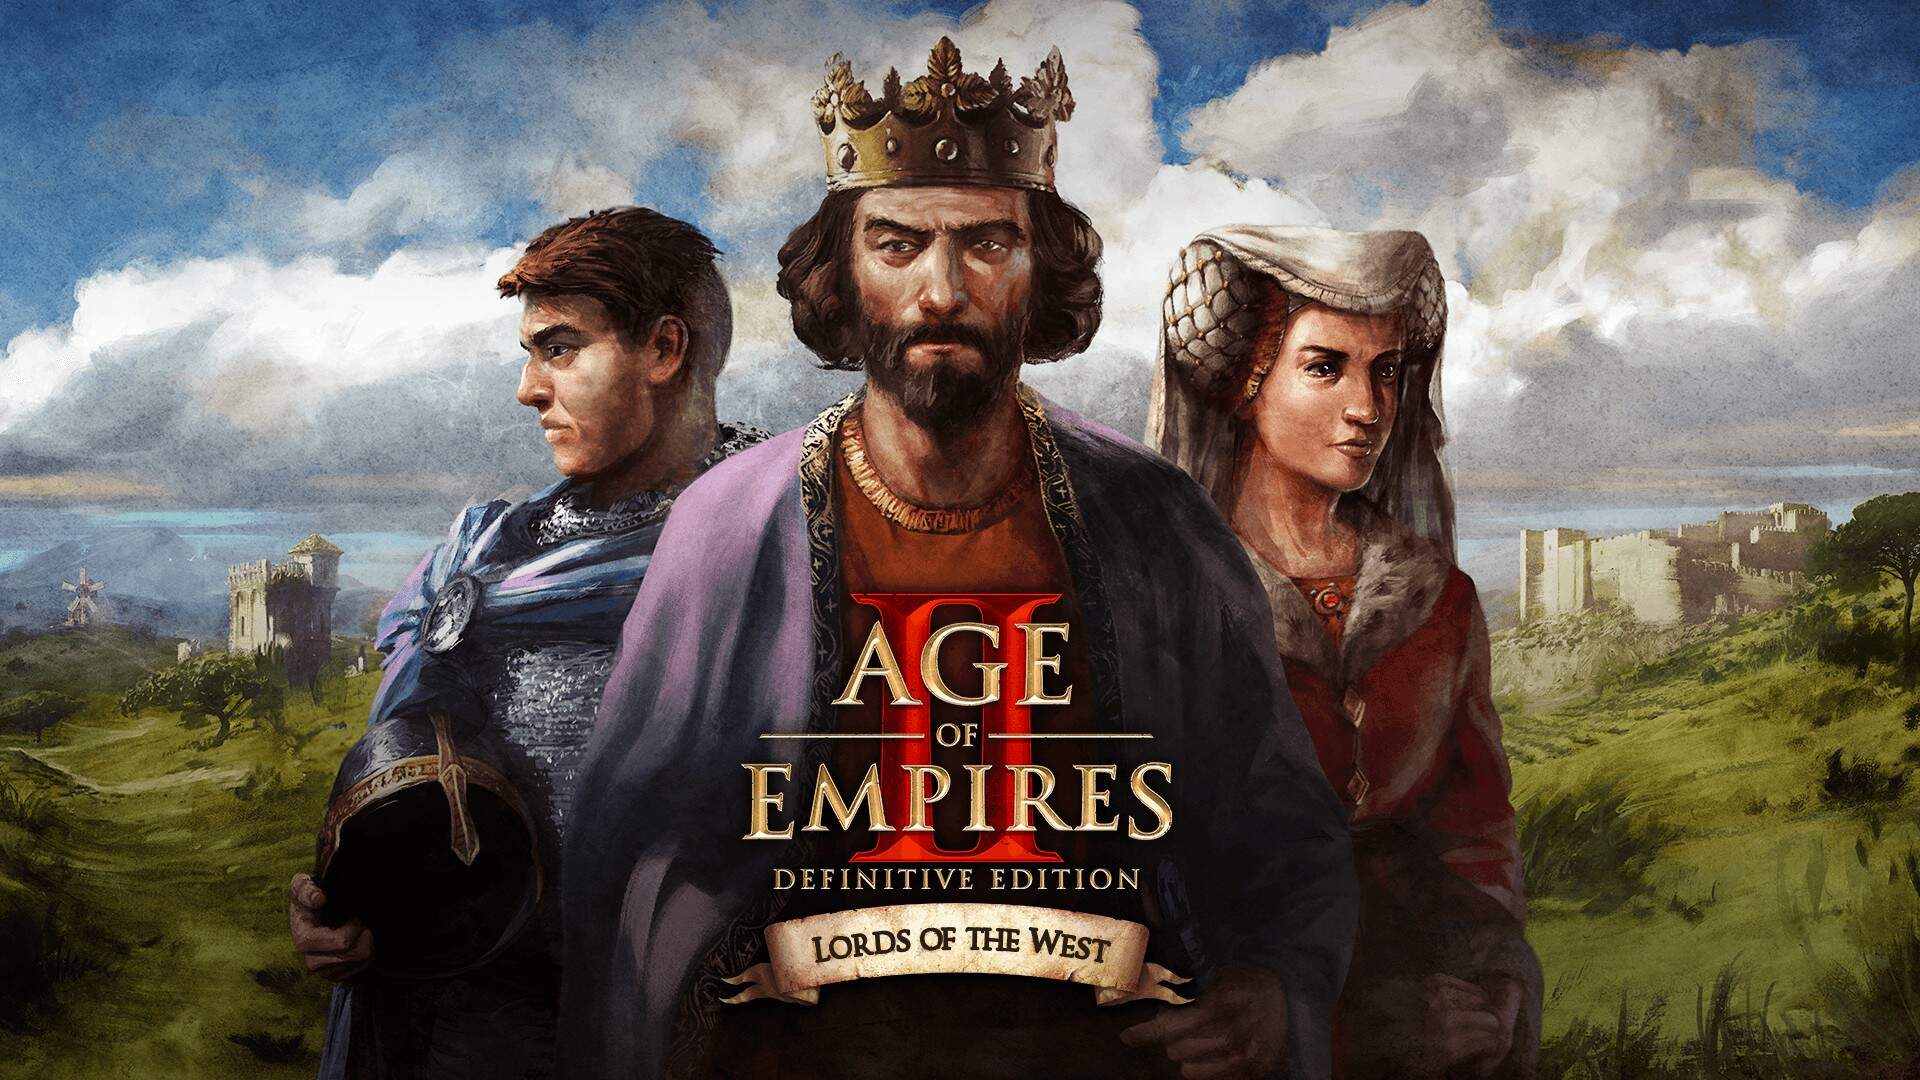 age of empires 1 free download reddit